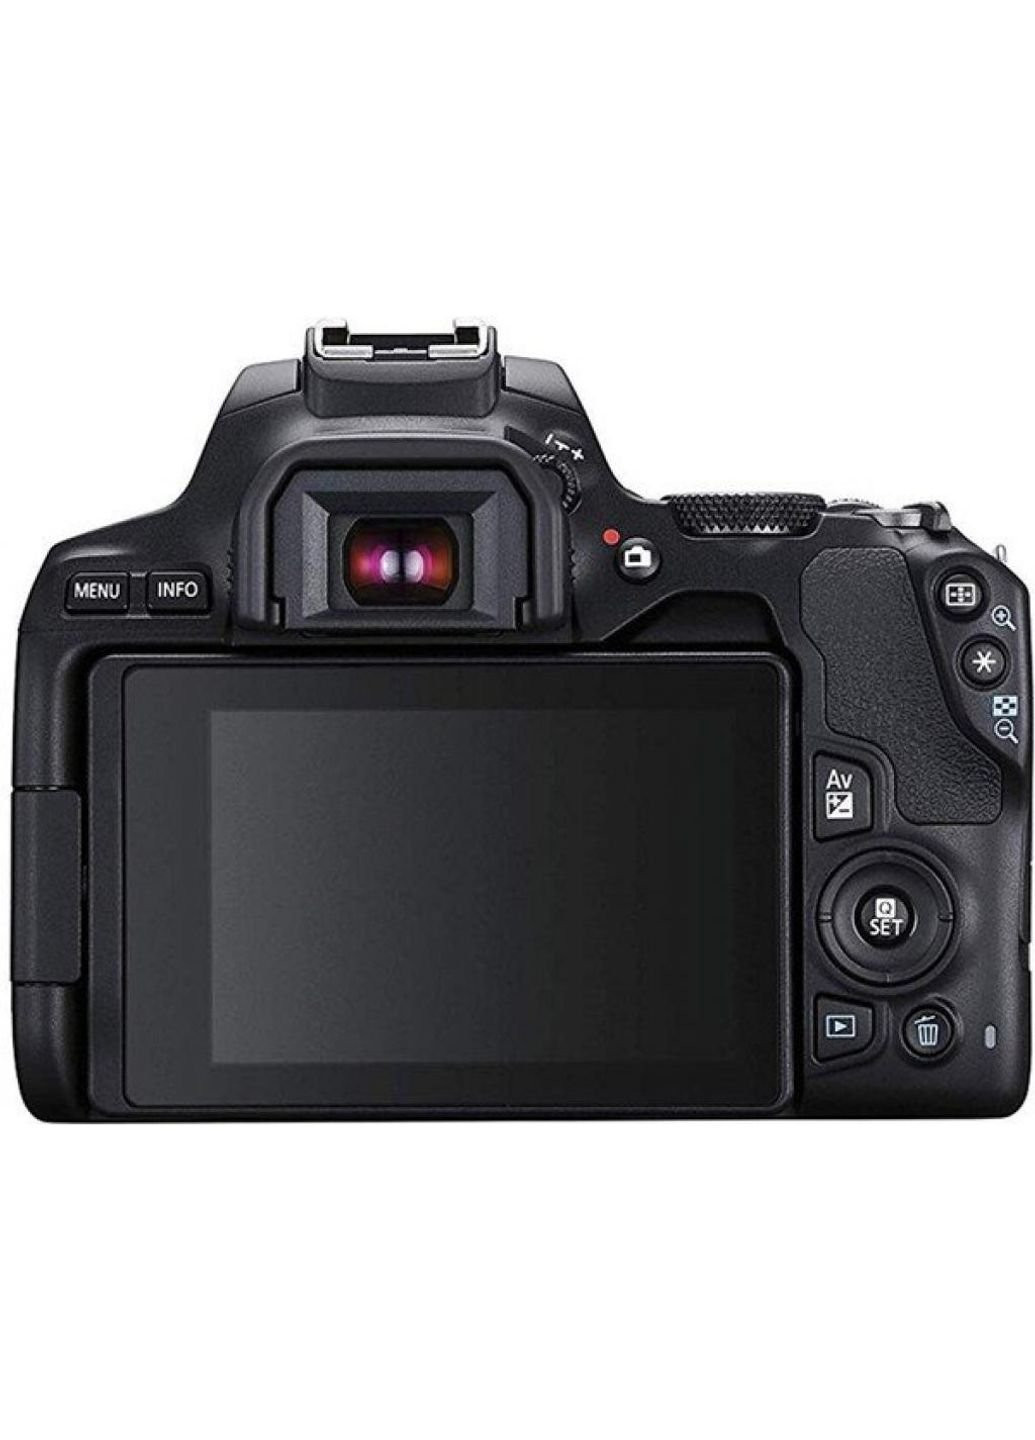 Цифровой фотоаппарат EOS 250D kit 18-55 IS STM Black Canon (251243475)